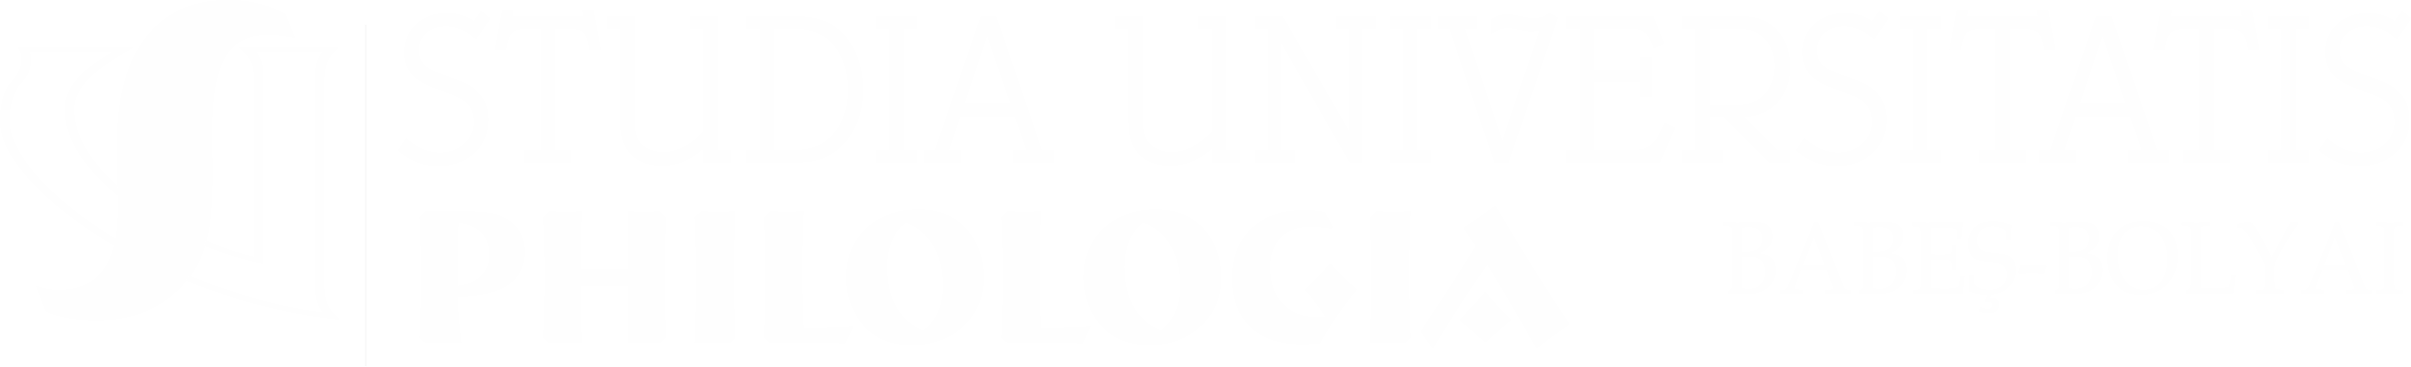 Studia Universitatis Babeş-Bolyai Philologia, Babeş-Bolyai University, Cluj-Napoca, Romania 